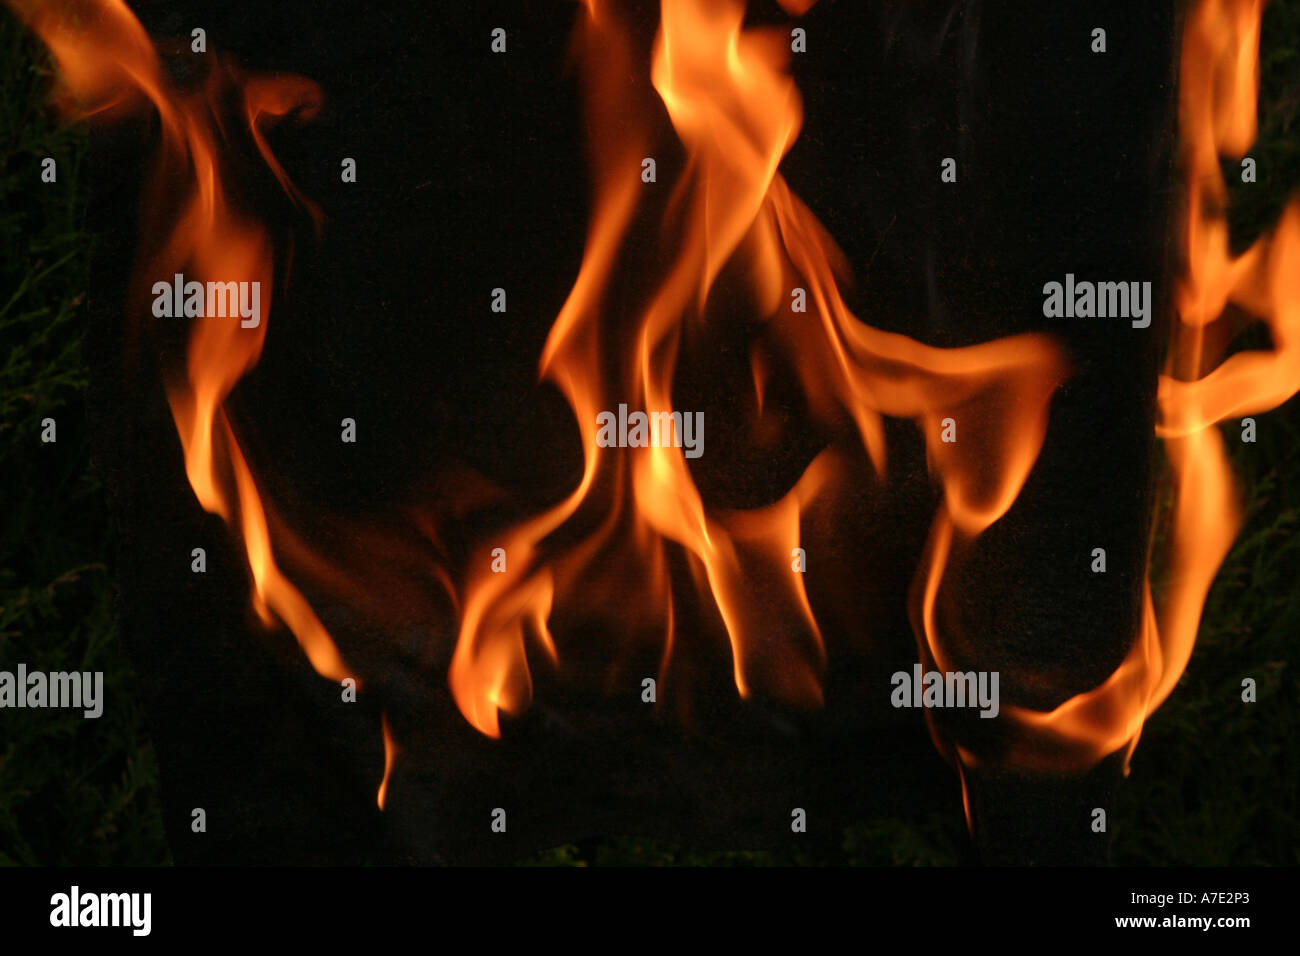 Orange Flames against a black background Stock Photo